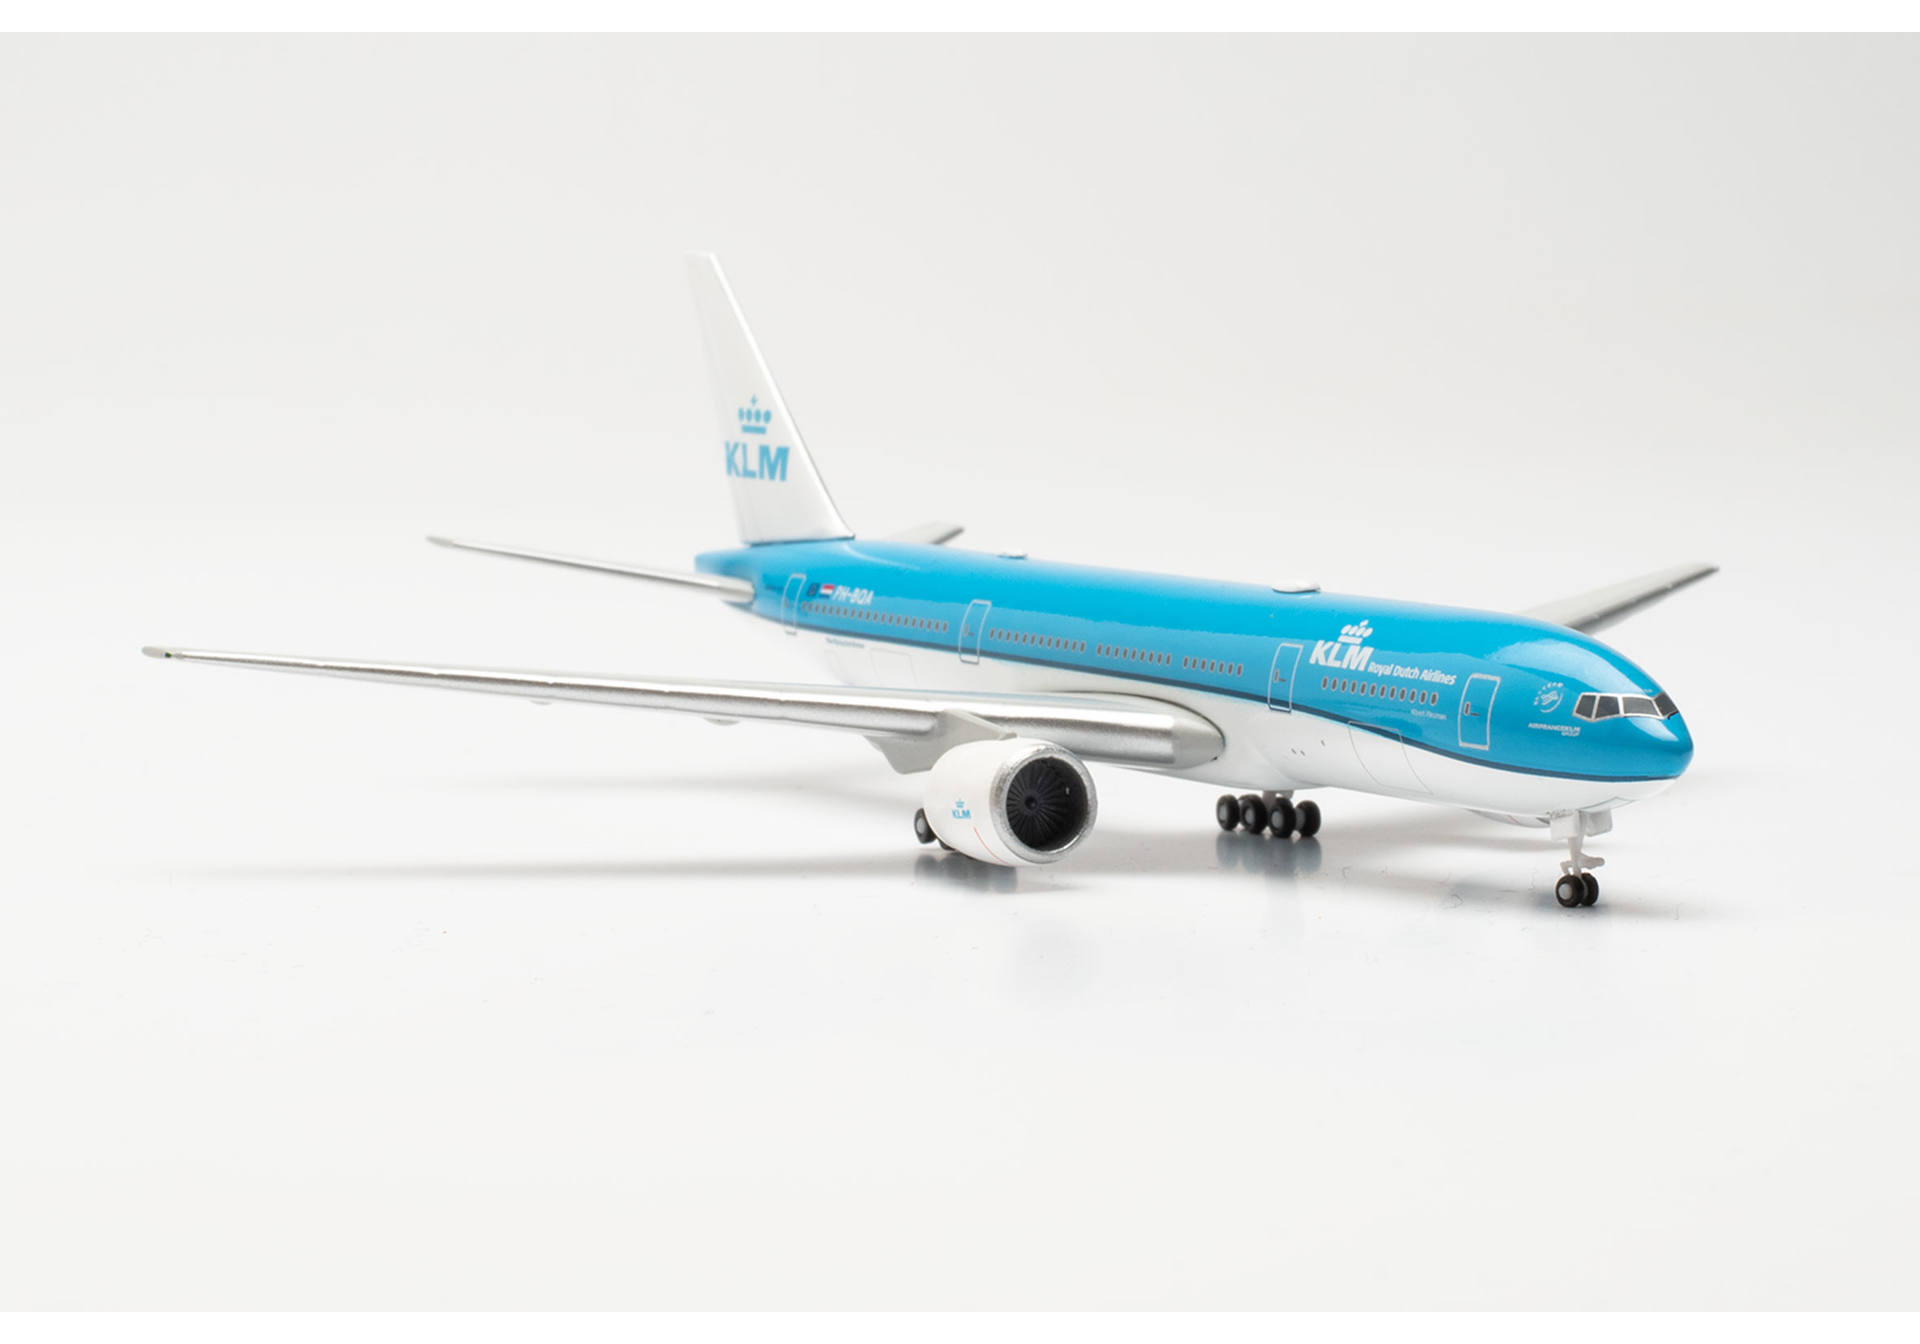 KLM Boeing 777-200 - PH-BQA "Albert Plesman"